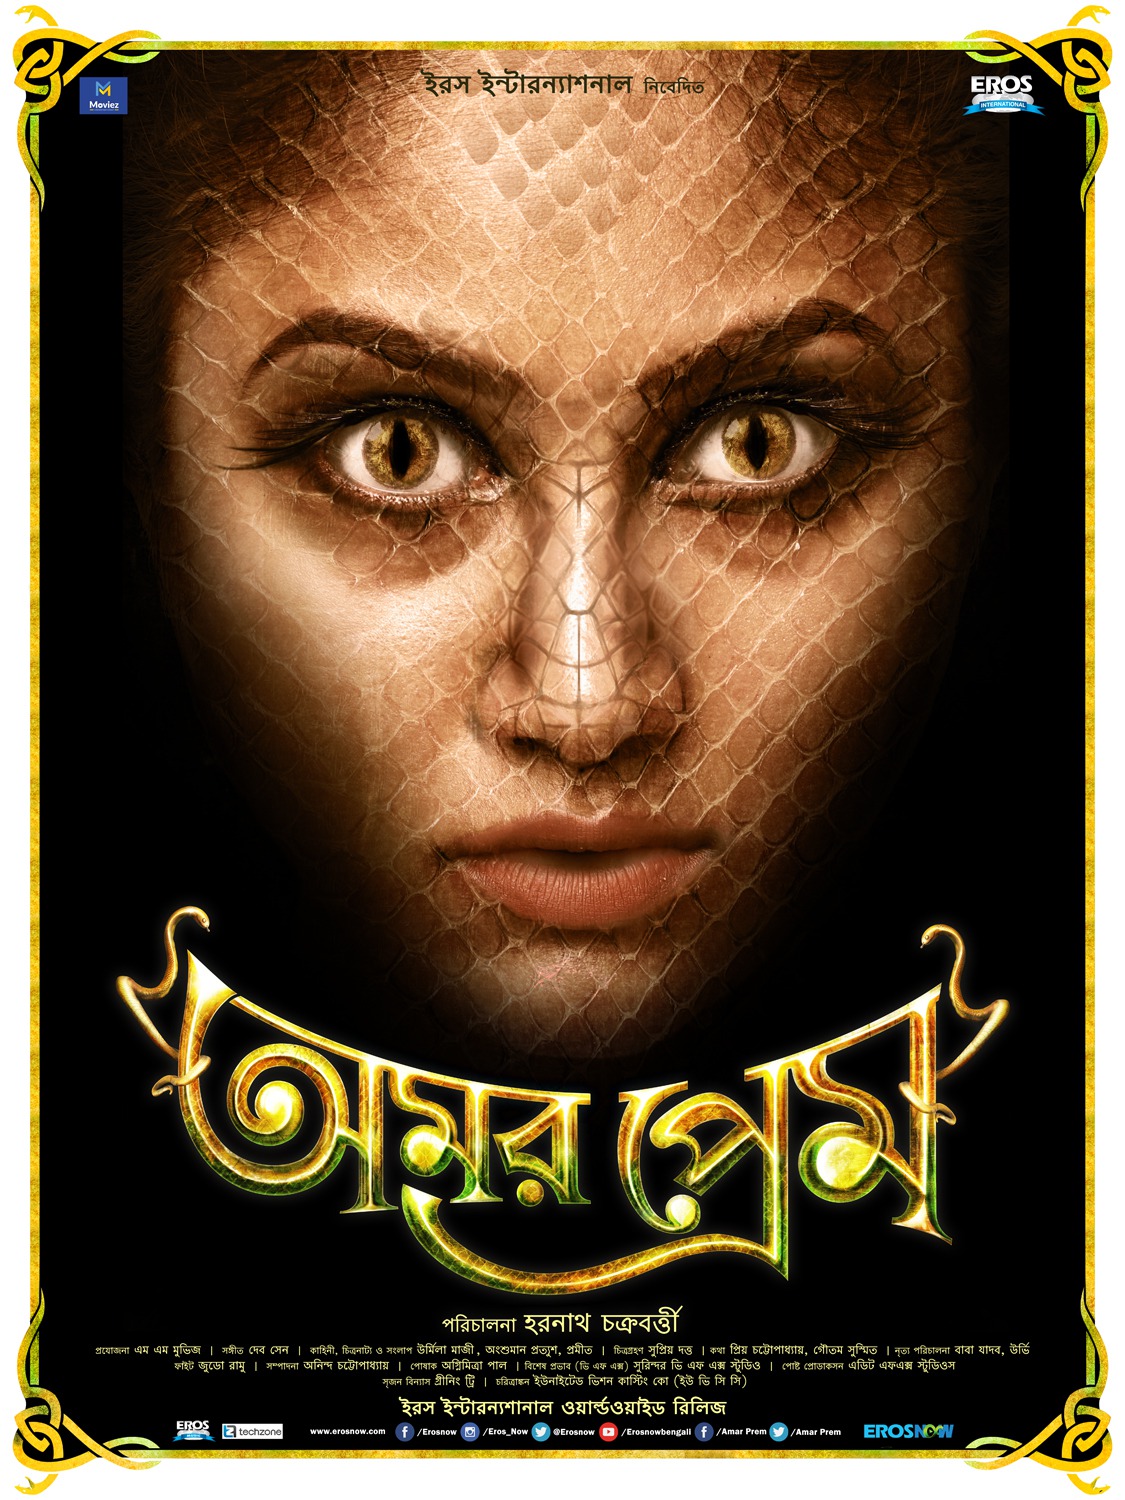 Extra Large Movie Poster Image for Amar Prem (#4 of 9)